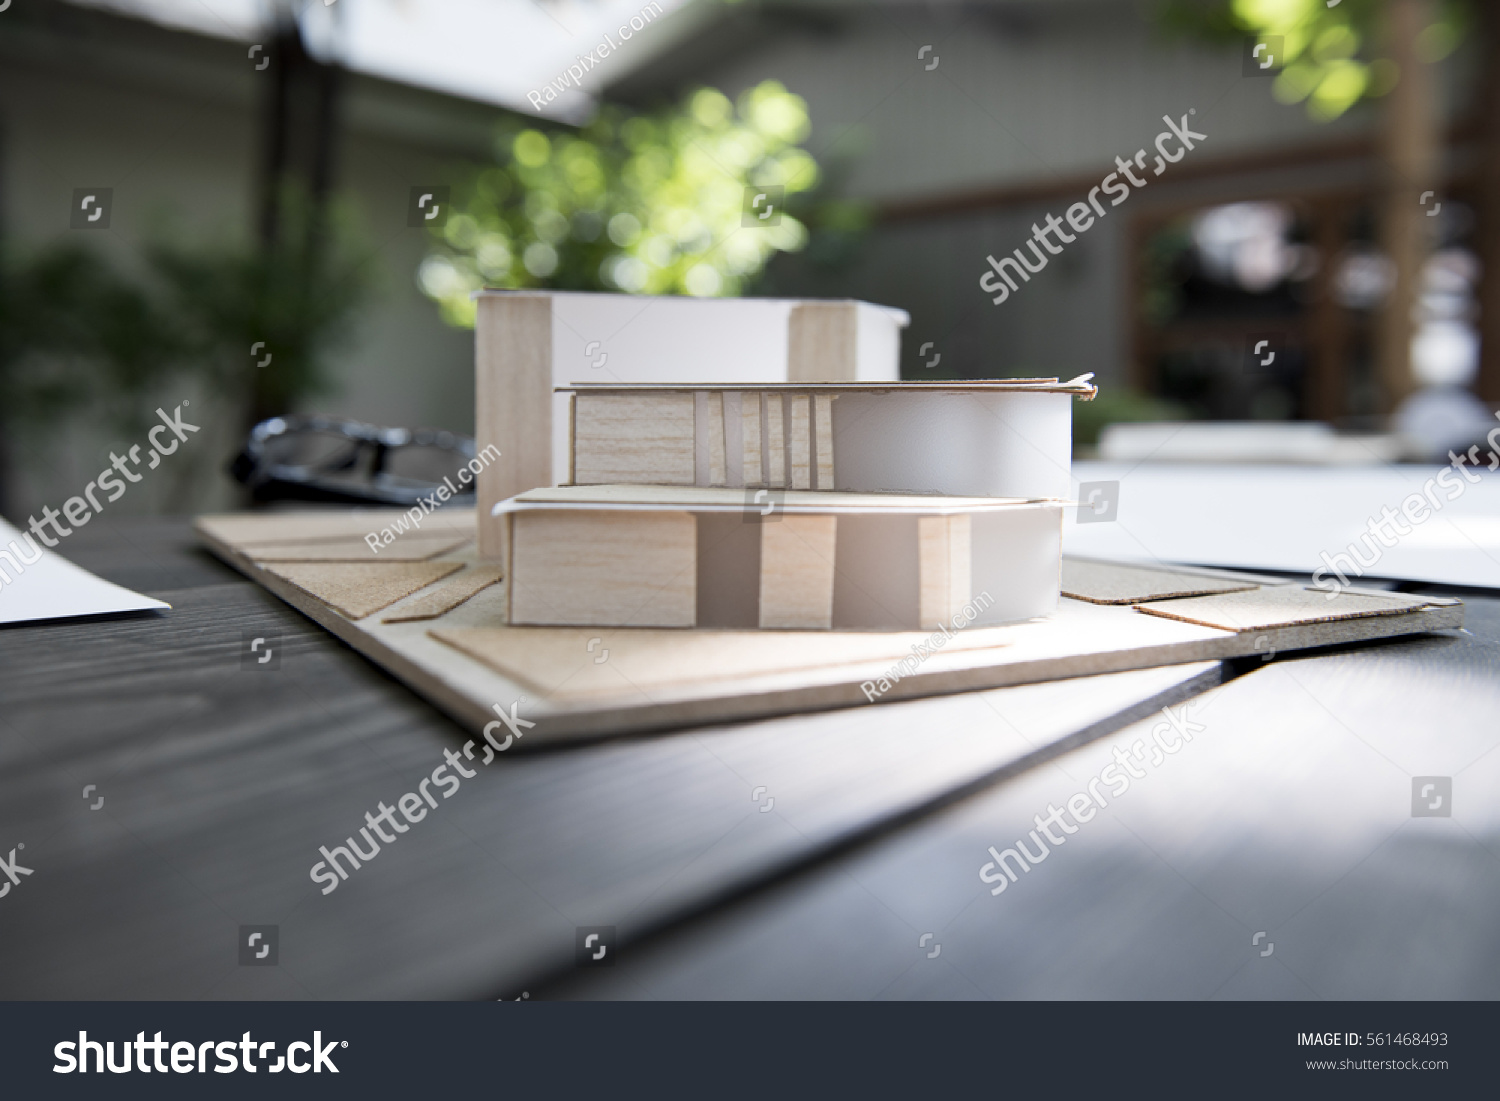 Housing Model Architecture Design #561468493